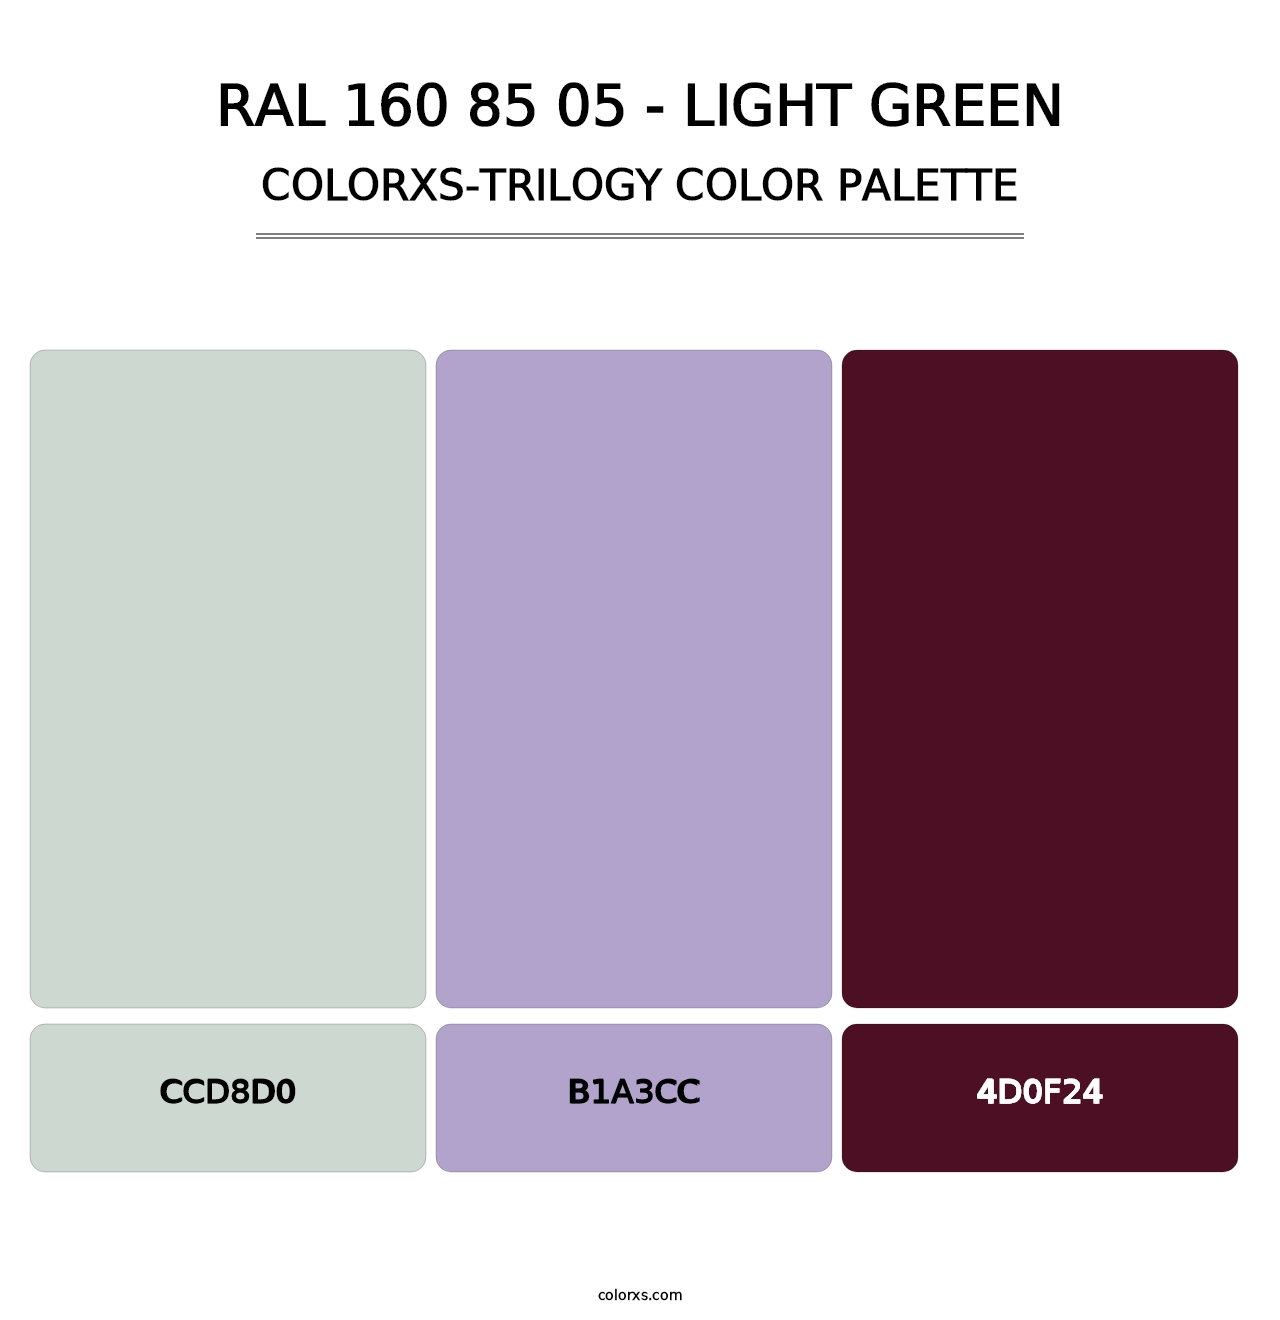 RAL 160 85 05 - Light Green - Colorxs Trilogy Palette